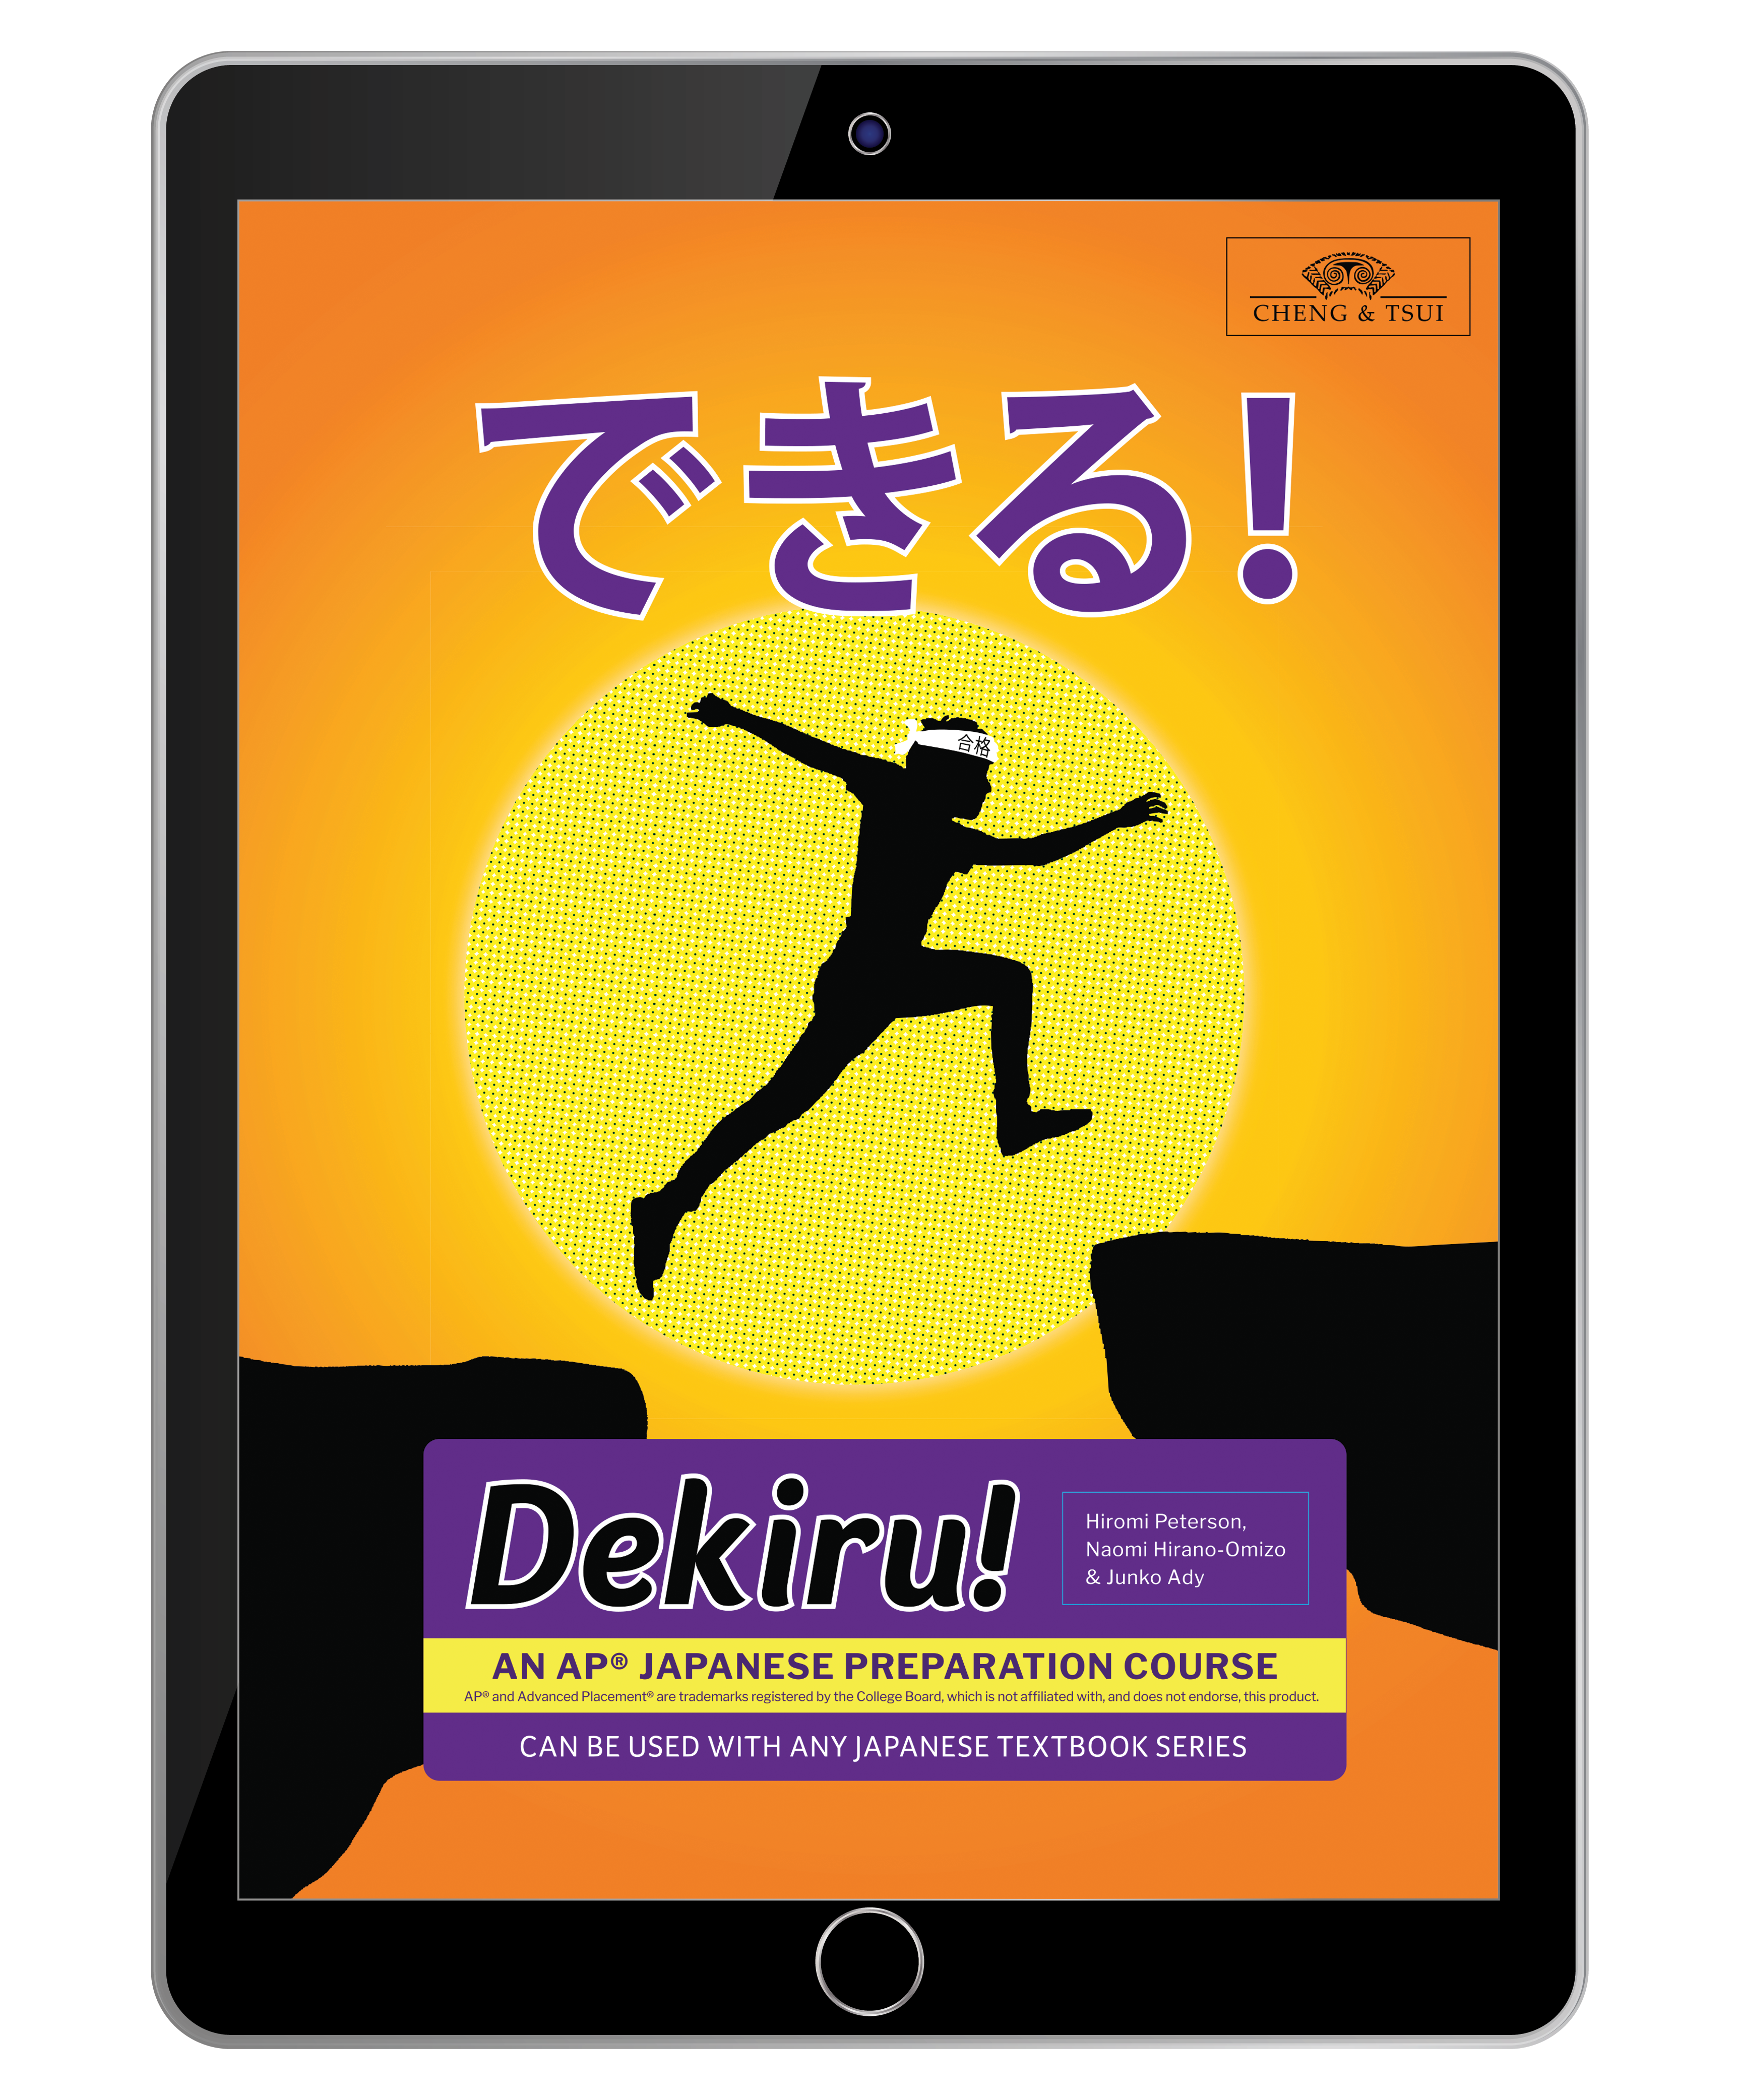 Cover image of Dekiru! shown on a black tablet.